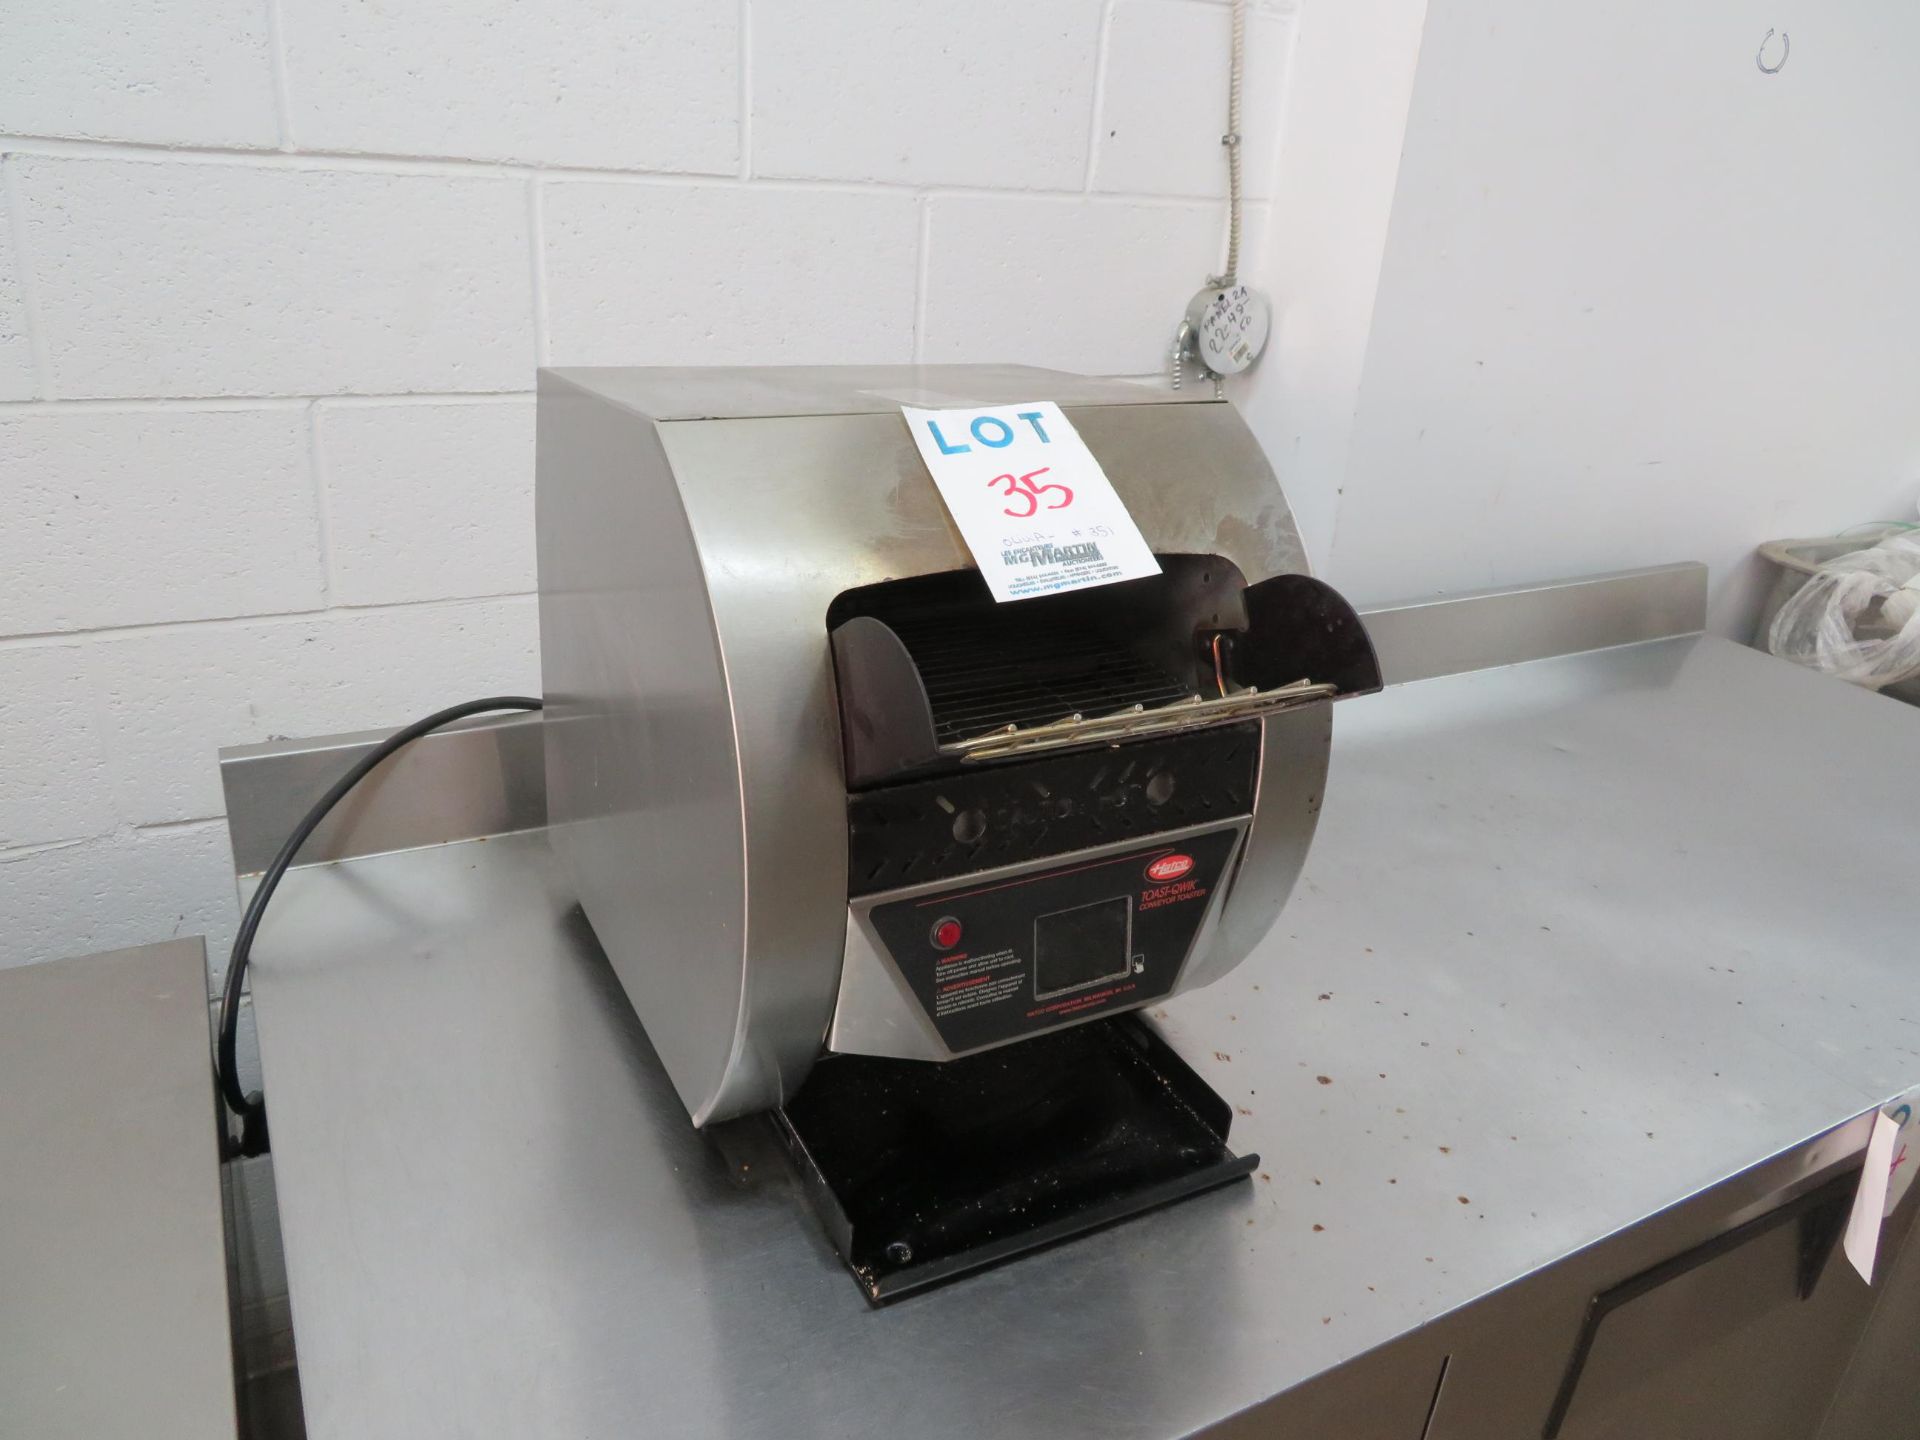 HATCO Toast Quik conveyor toaster